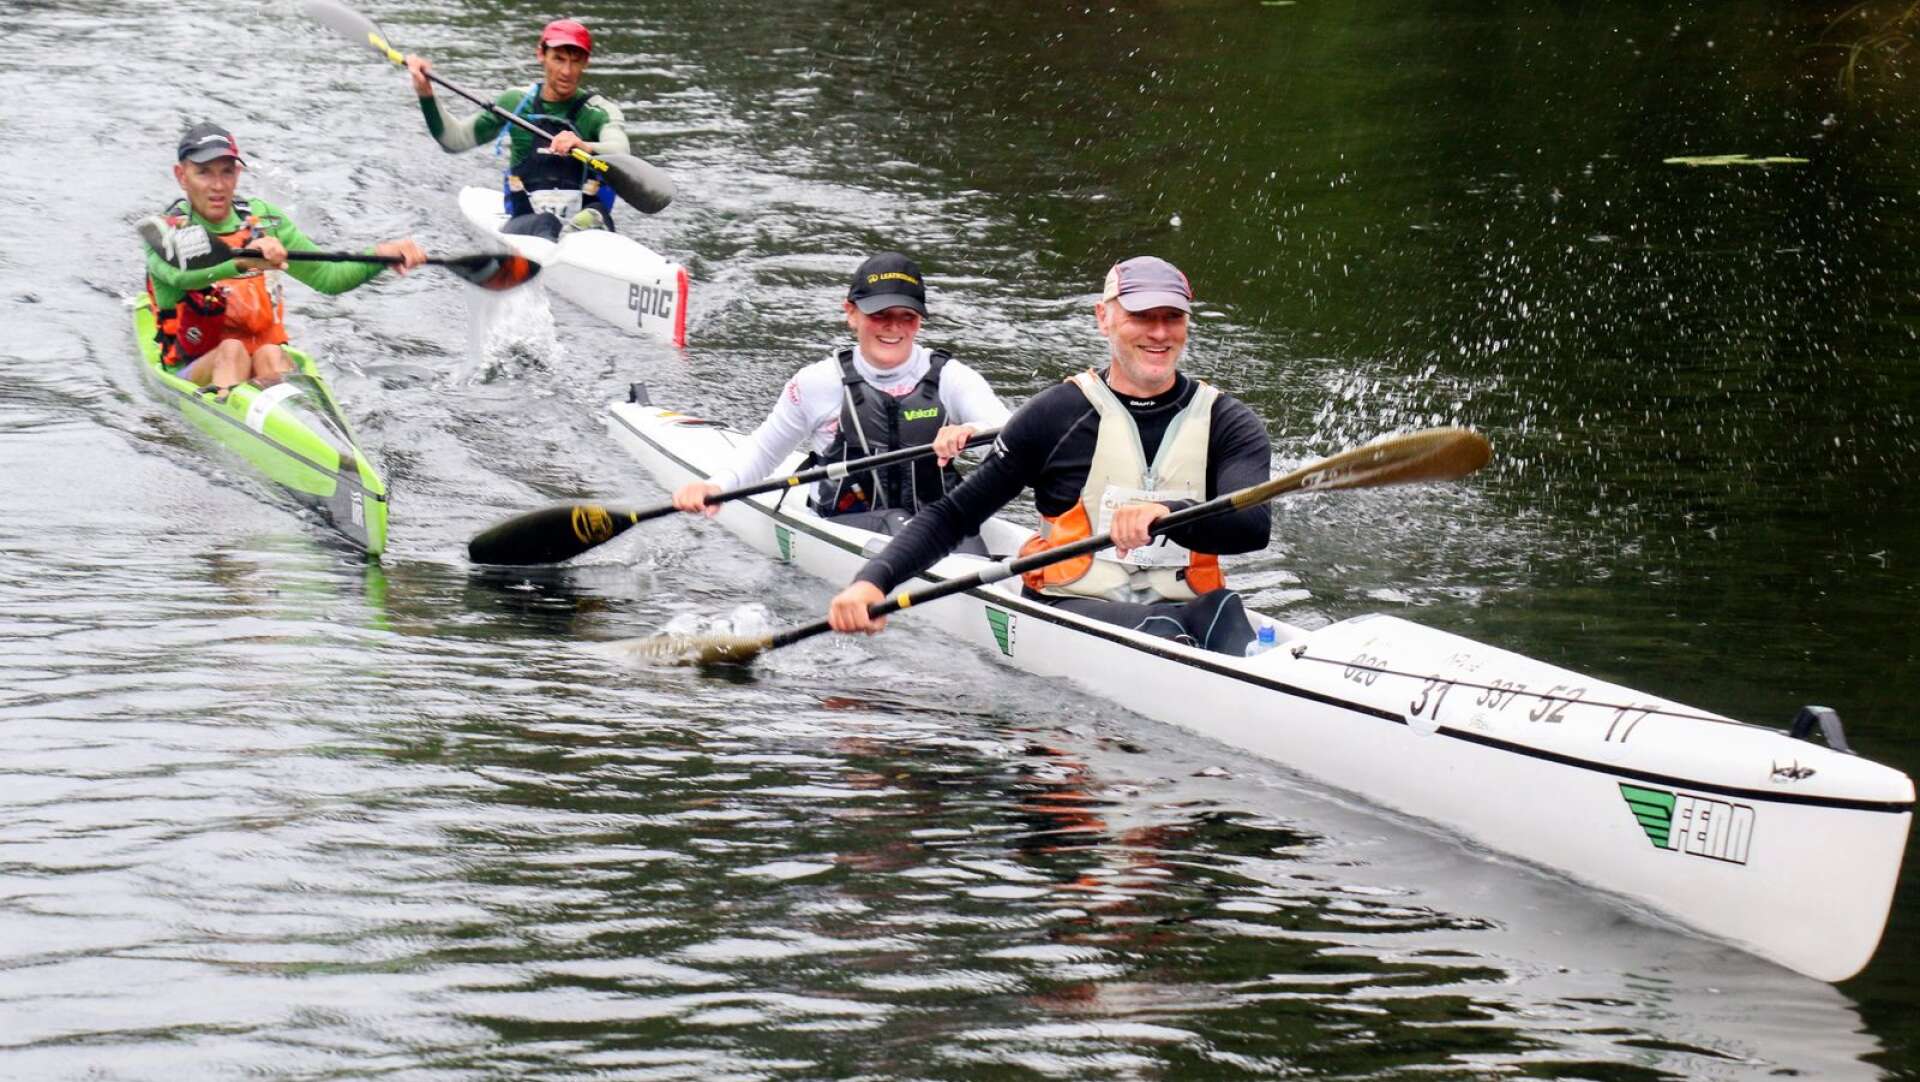 Den stora idrottsutmaningen Dalslands kanotmaraton ställs in i sommar.